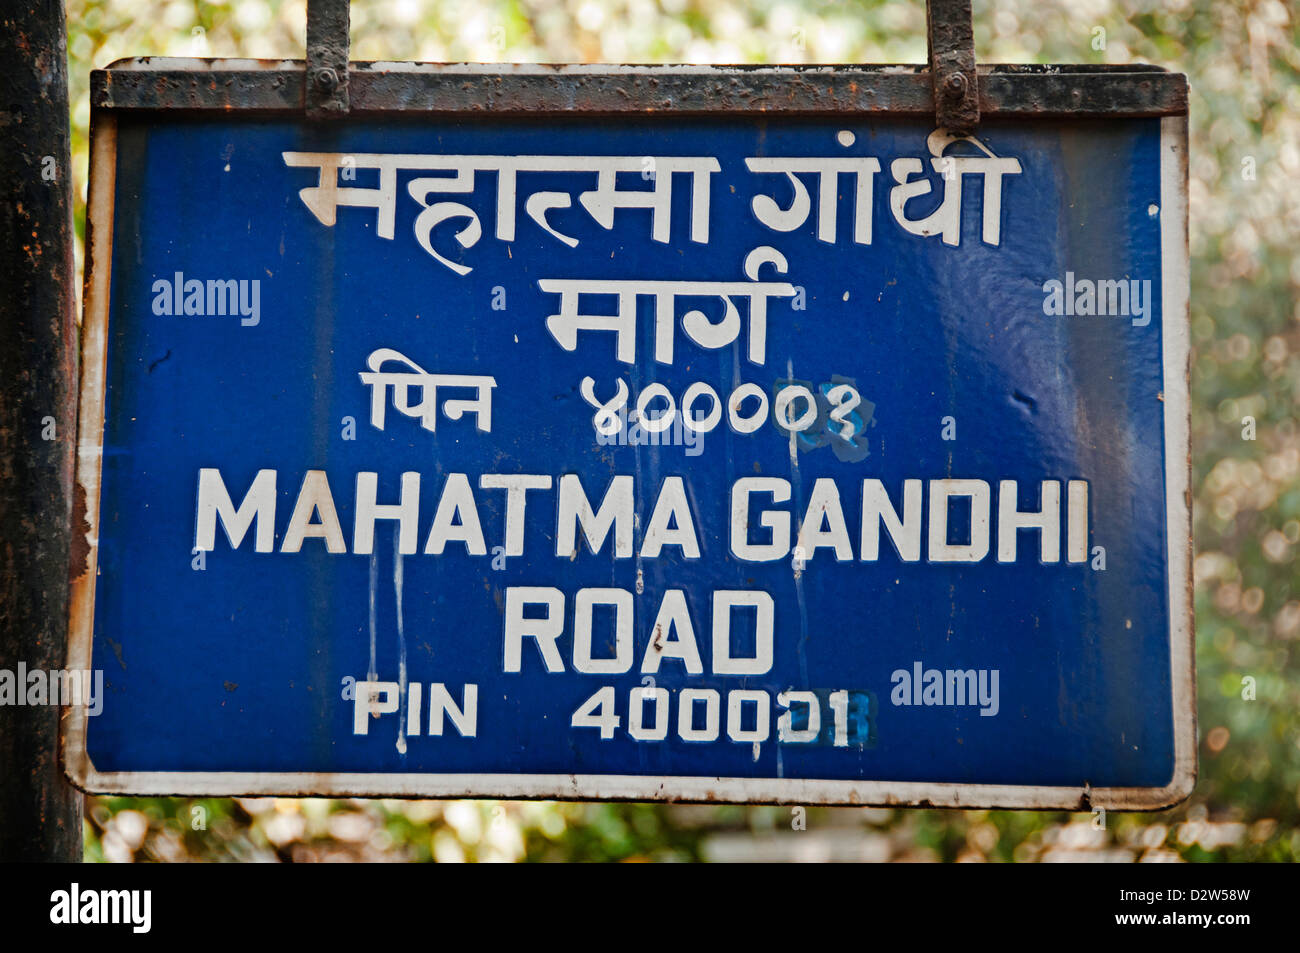 Mumbai India Mahatma Gandhi Road street sign Stock Photo